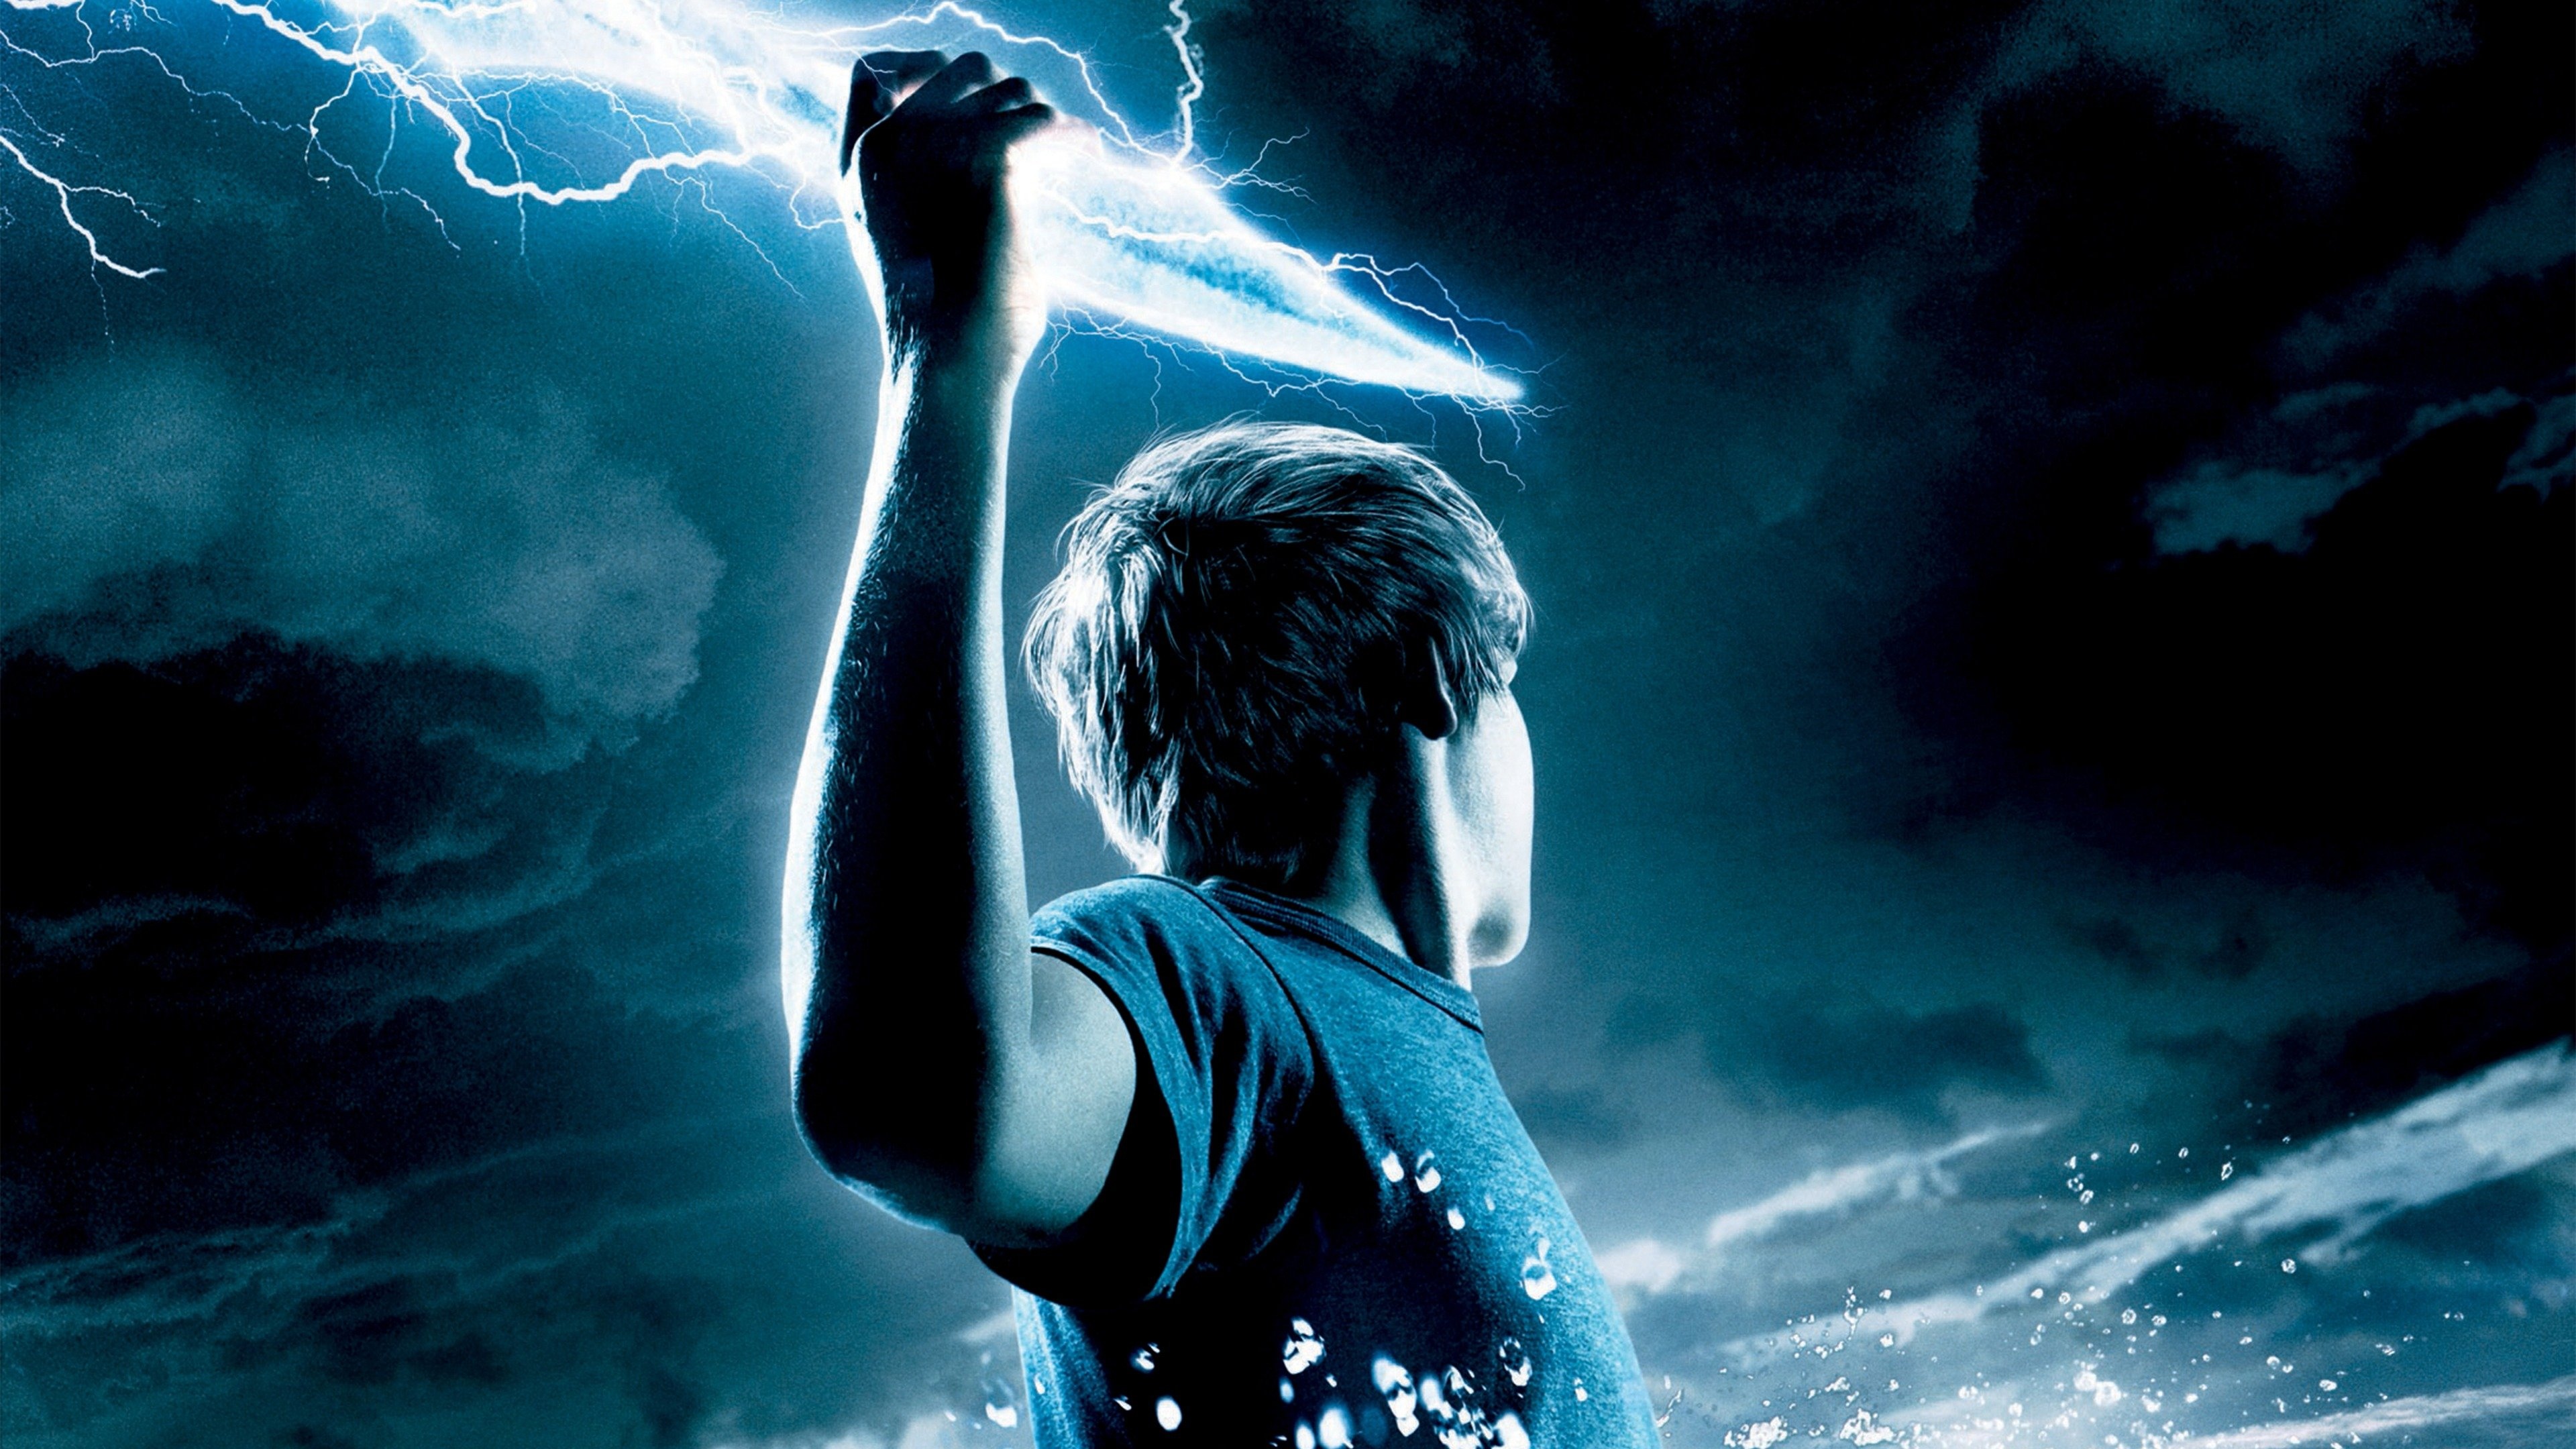 Logan Lerman (Percy Jackson), Lightning Thief movie online, Where to watch, Streaming options, 3840x2160 4K Desktop